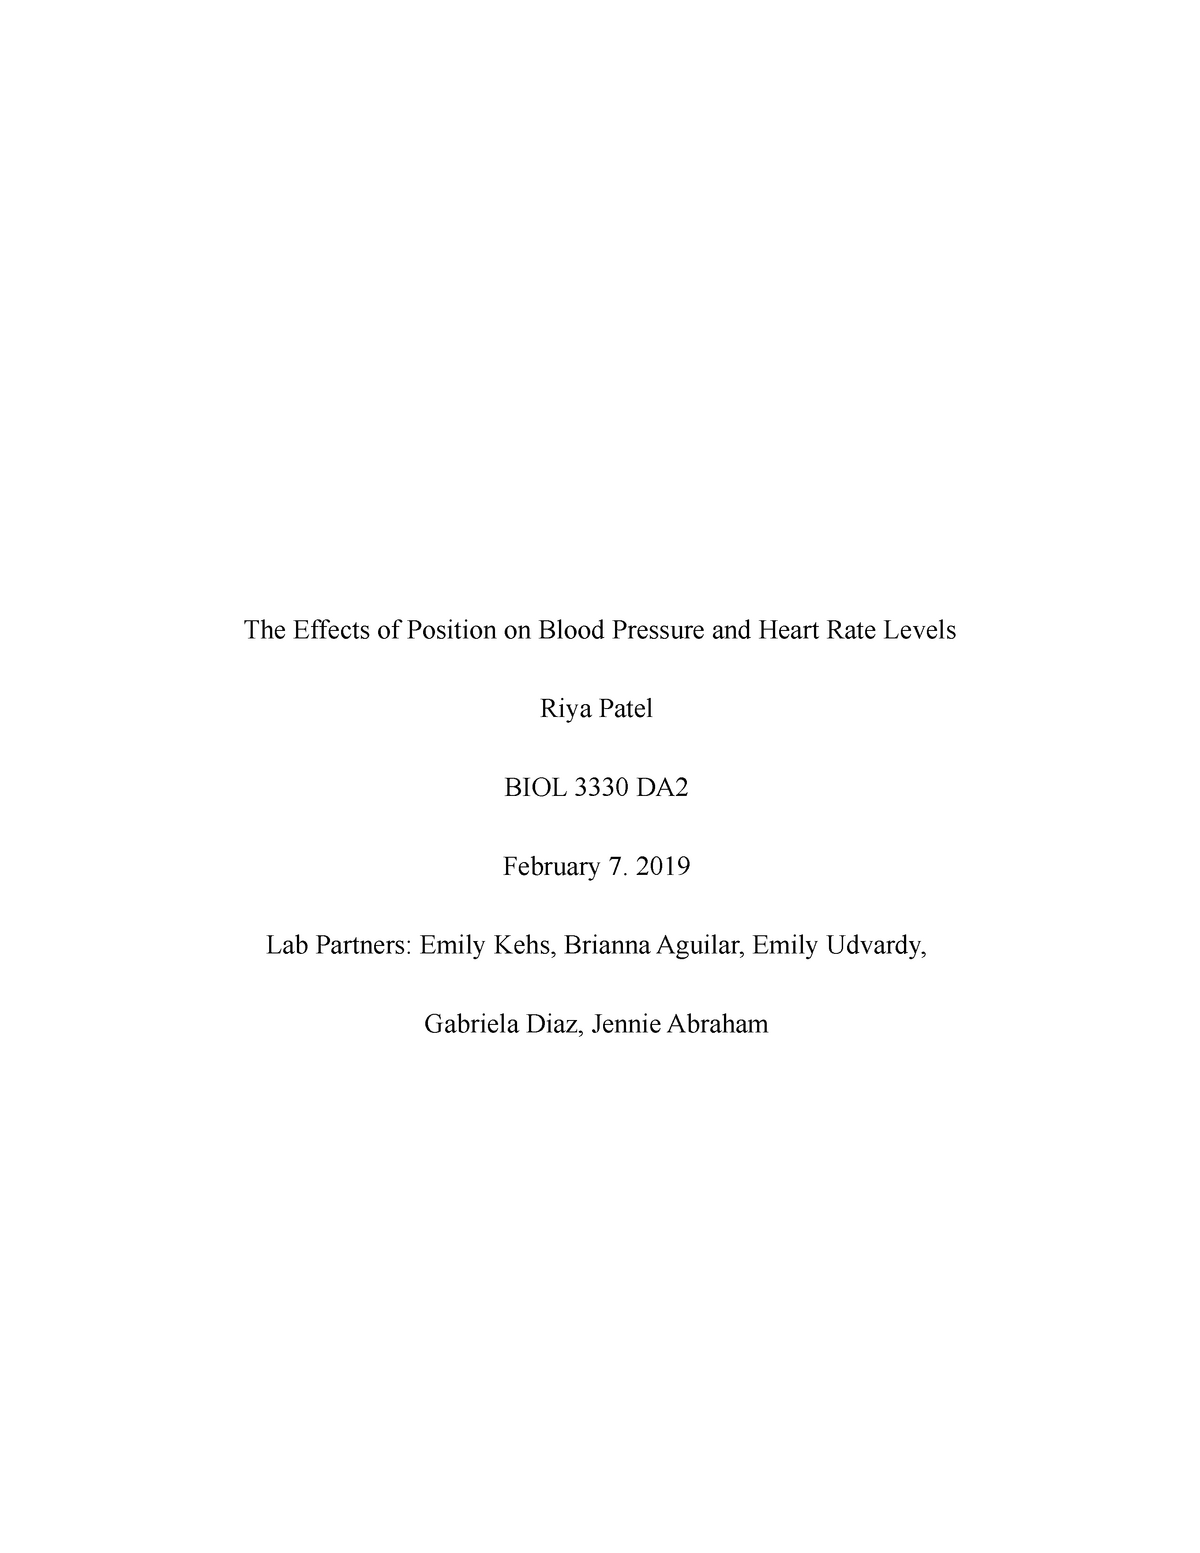 blood pressure lab report